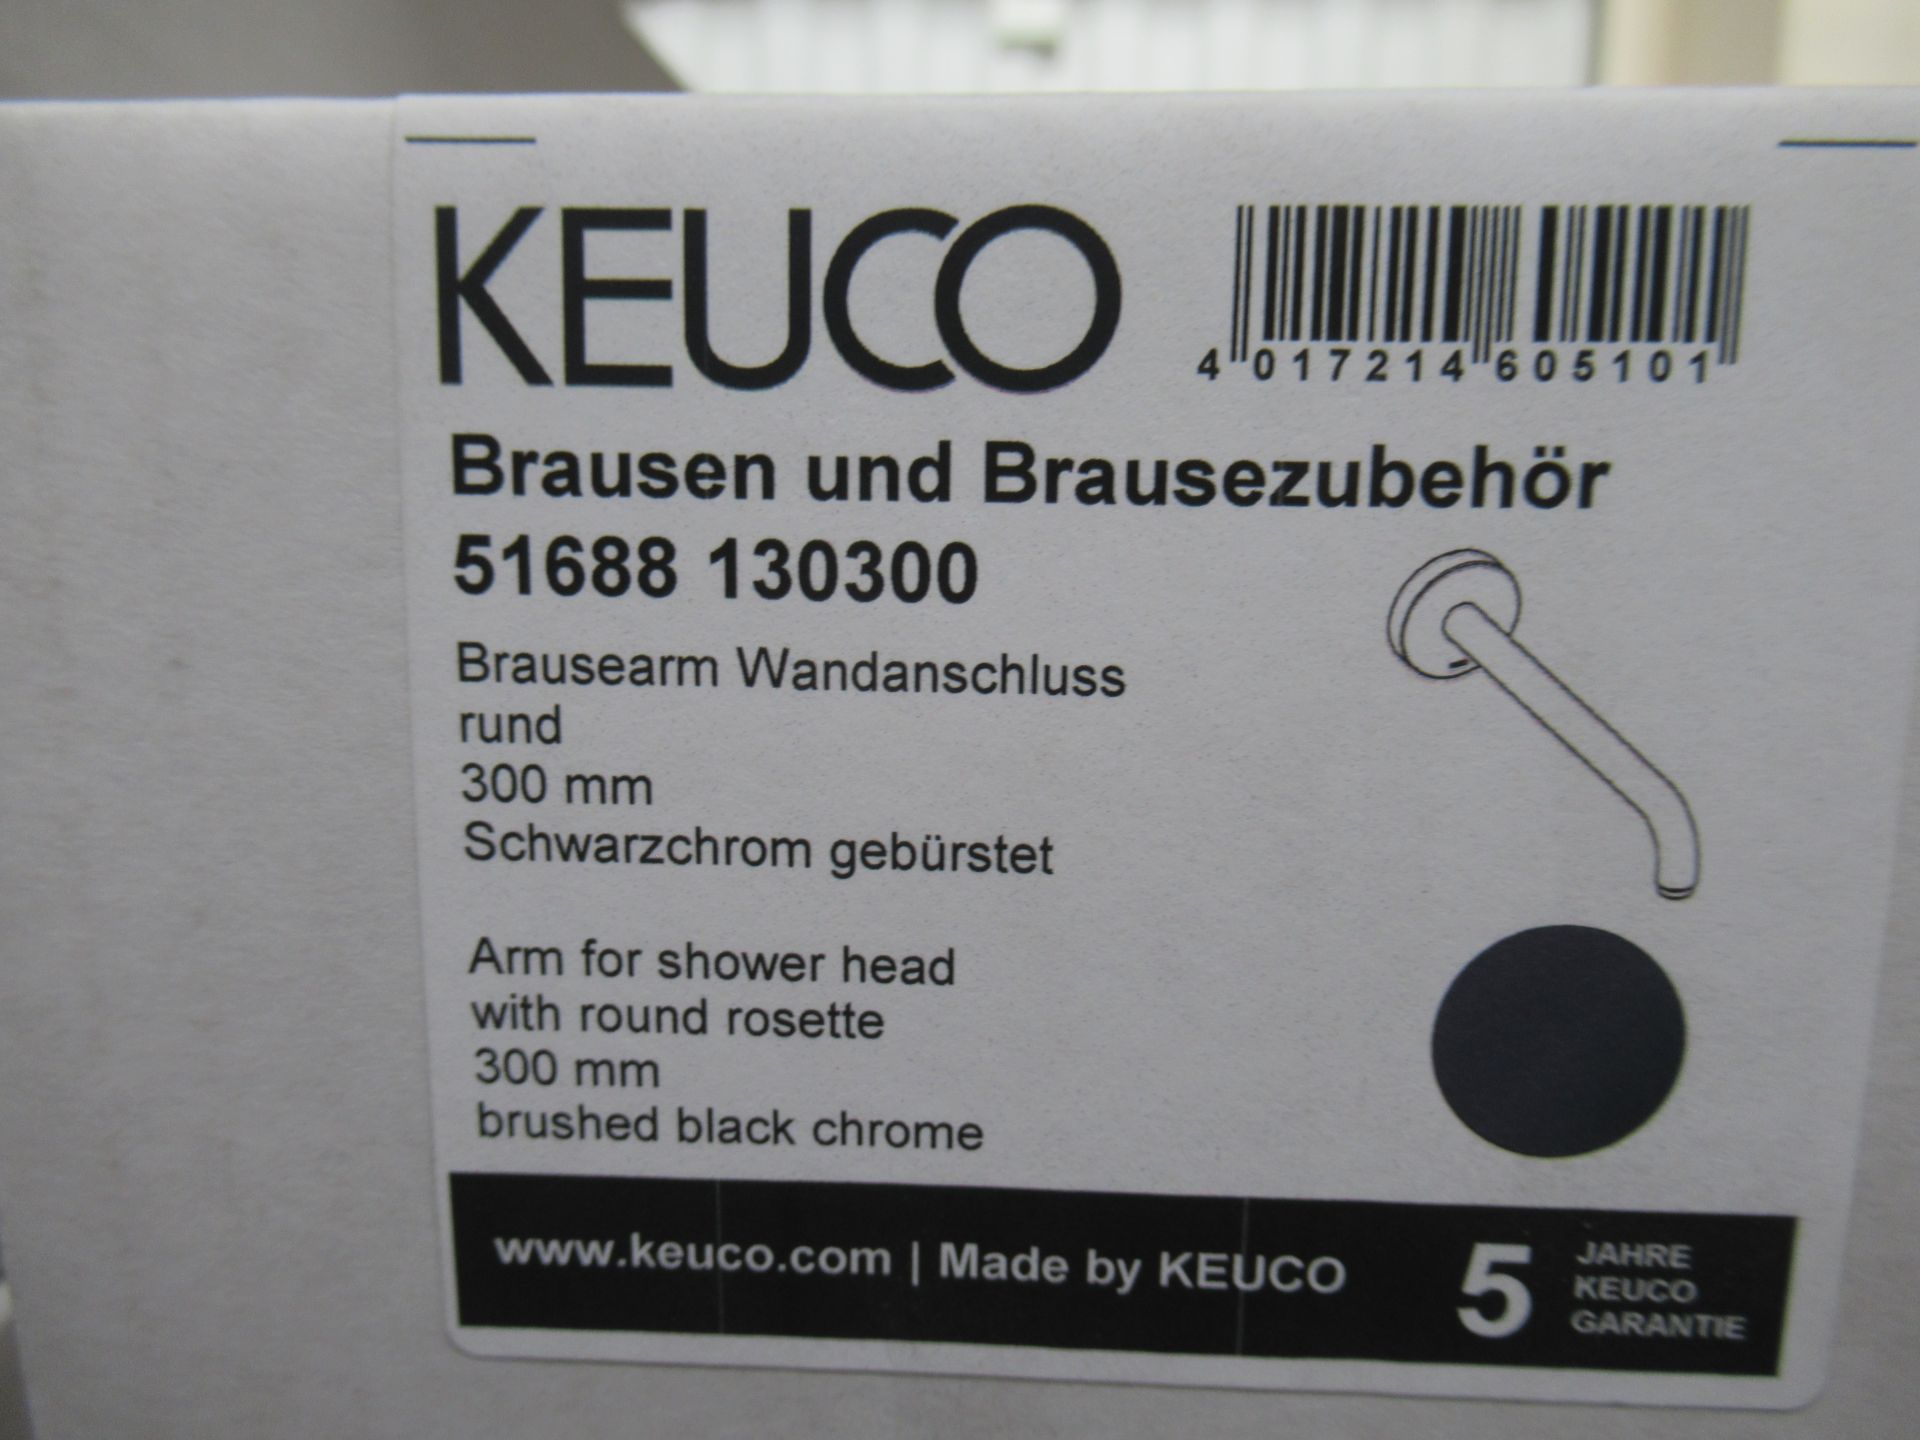 2 x Keuco Arm for Shower Head, Brushed Black Chrome, P/N 51688-130300 - Image 2 of 2